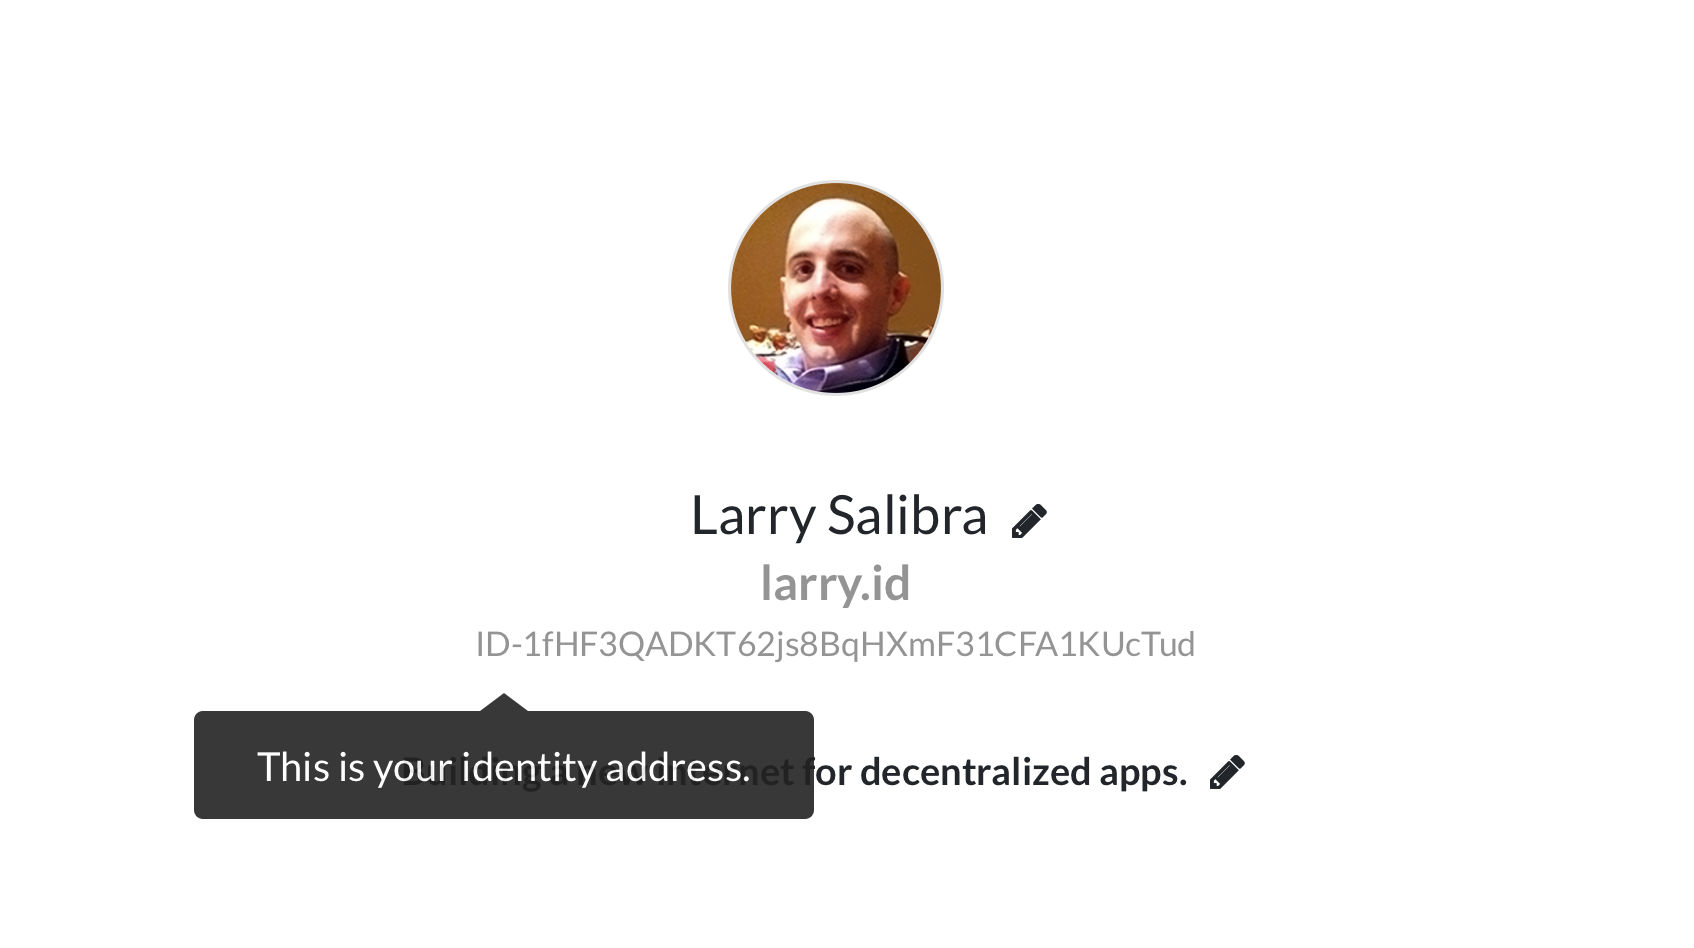 Larry's identity address